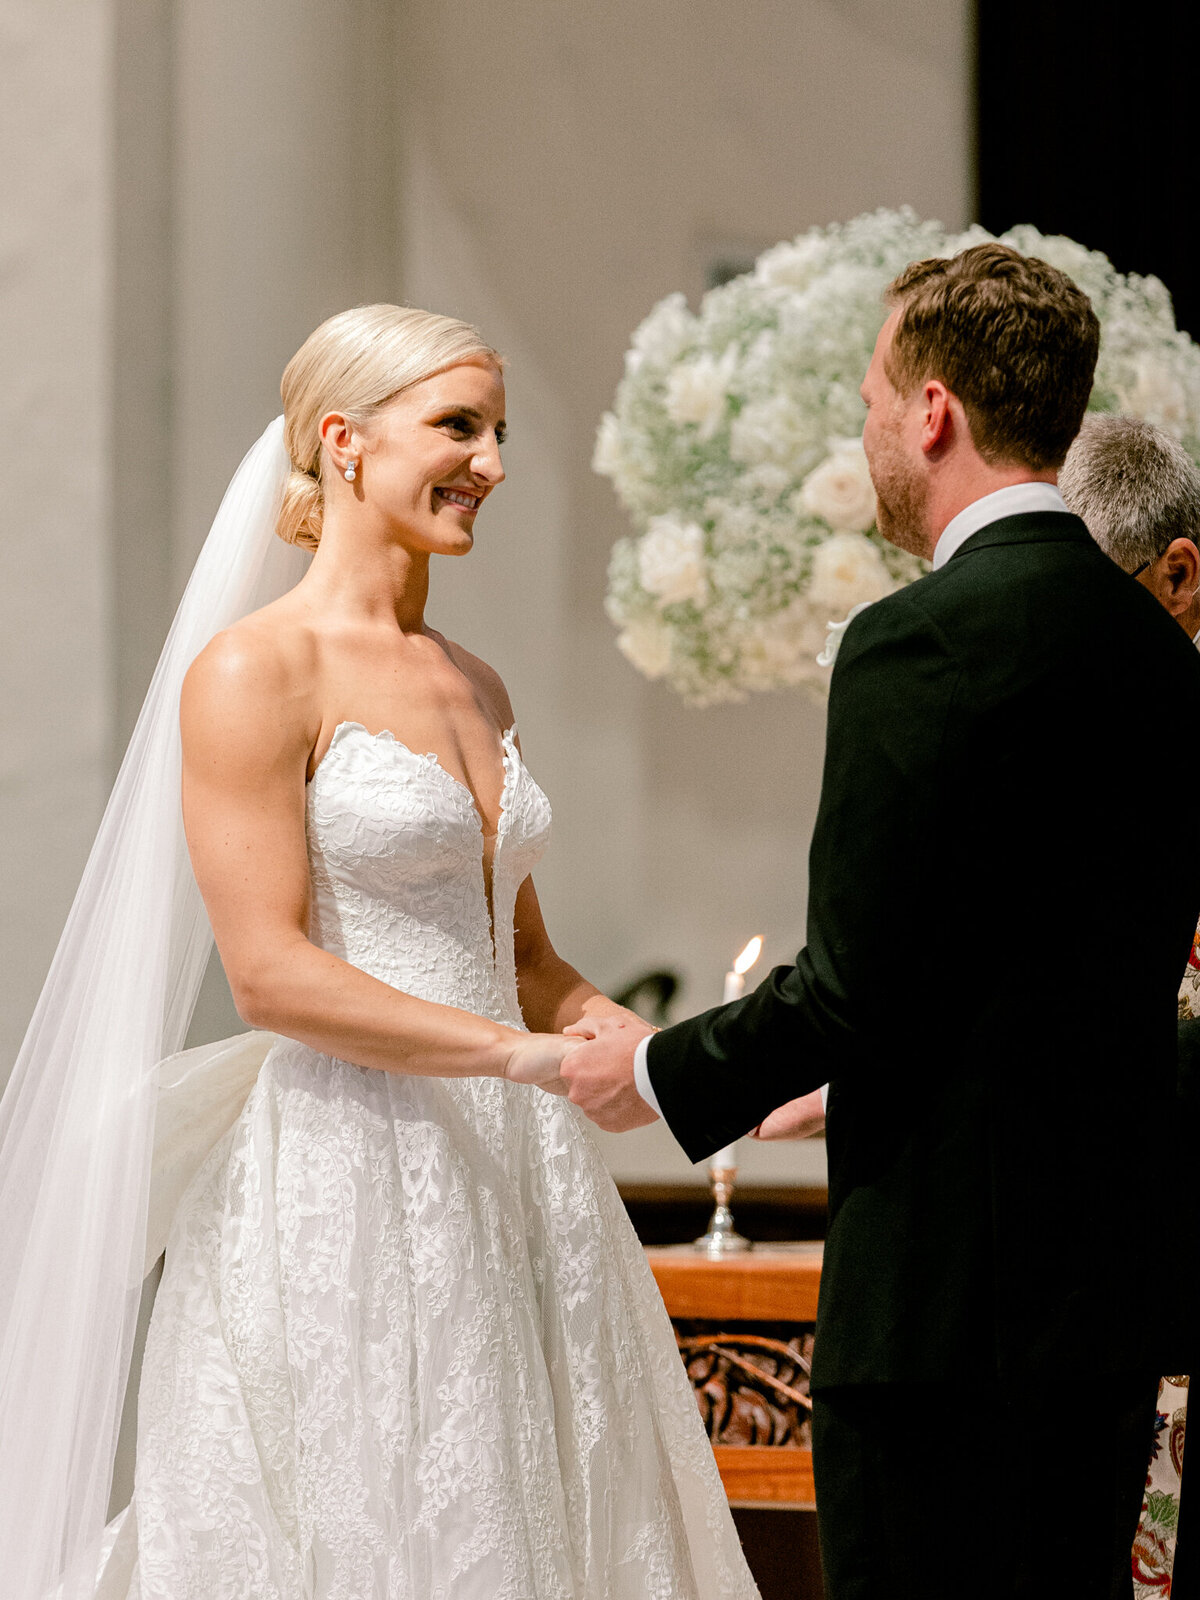 Katelyn & Kyle's Wedding at the Adolphus Hotel | Dallas Wedding Photographer | Sami Kathryn Photography-152